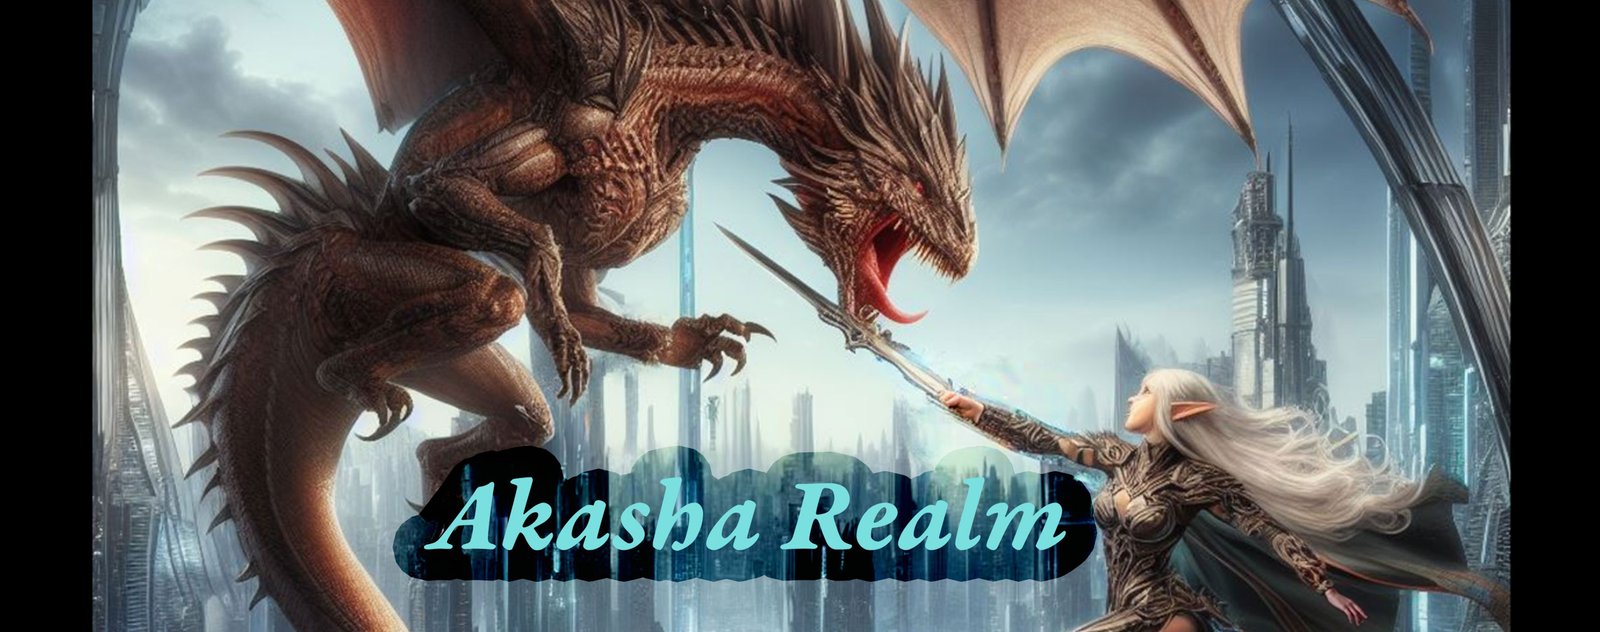 Akasha Realm science fantasy future city with elf warrior woman fighting a dragon.